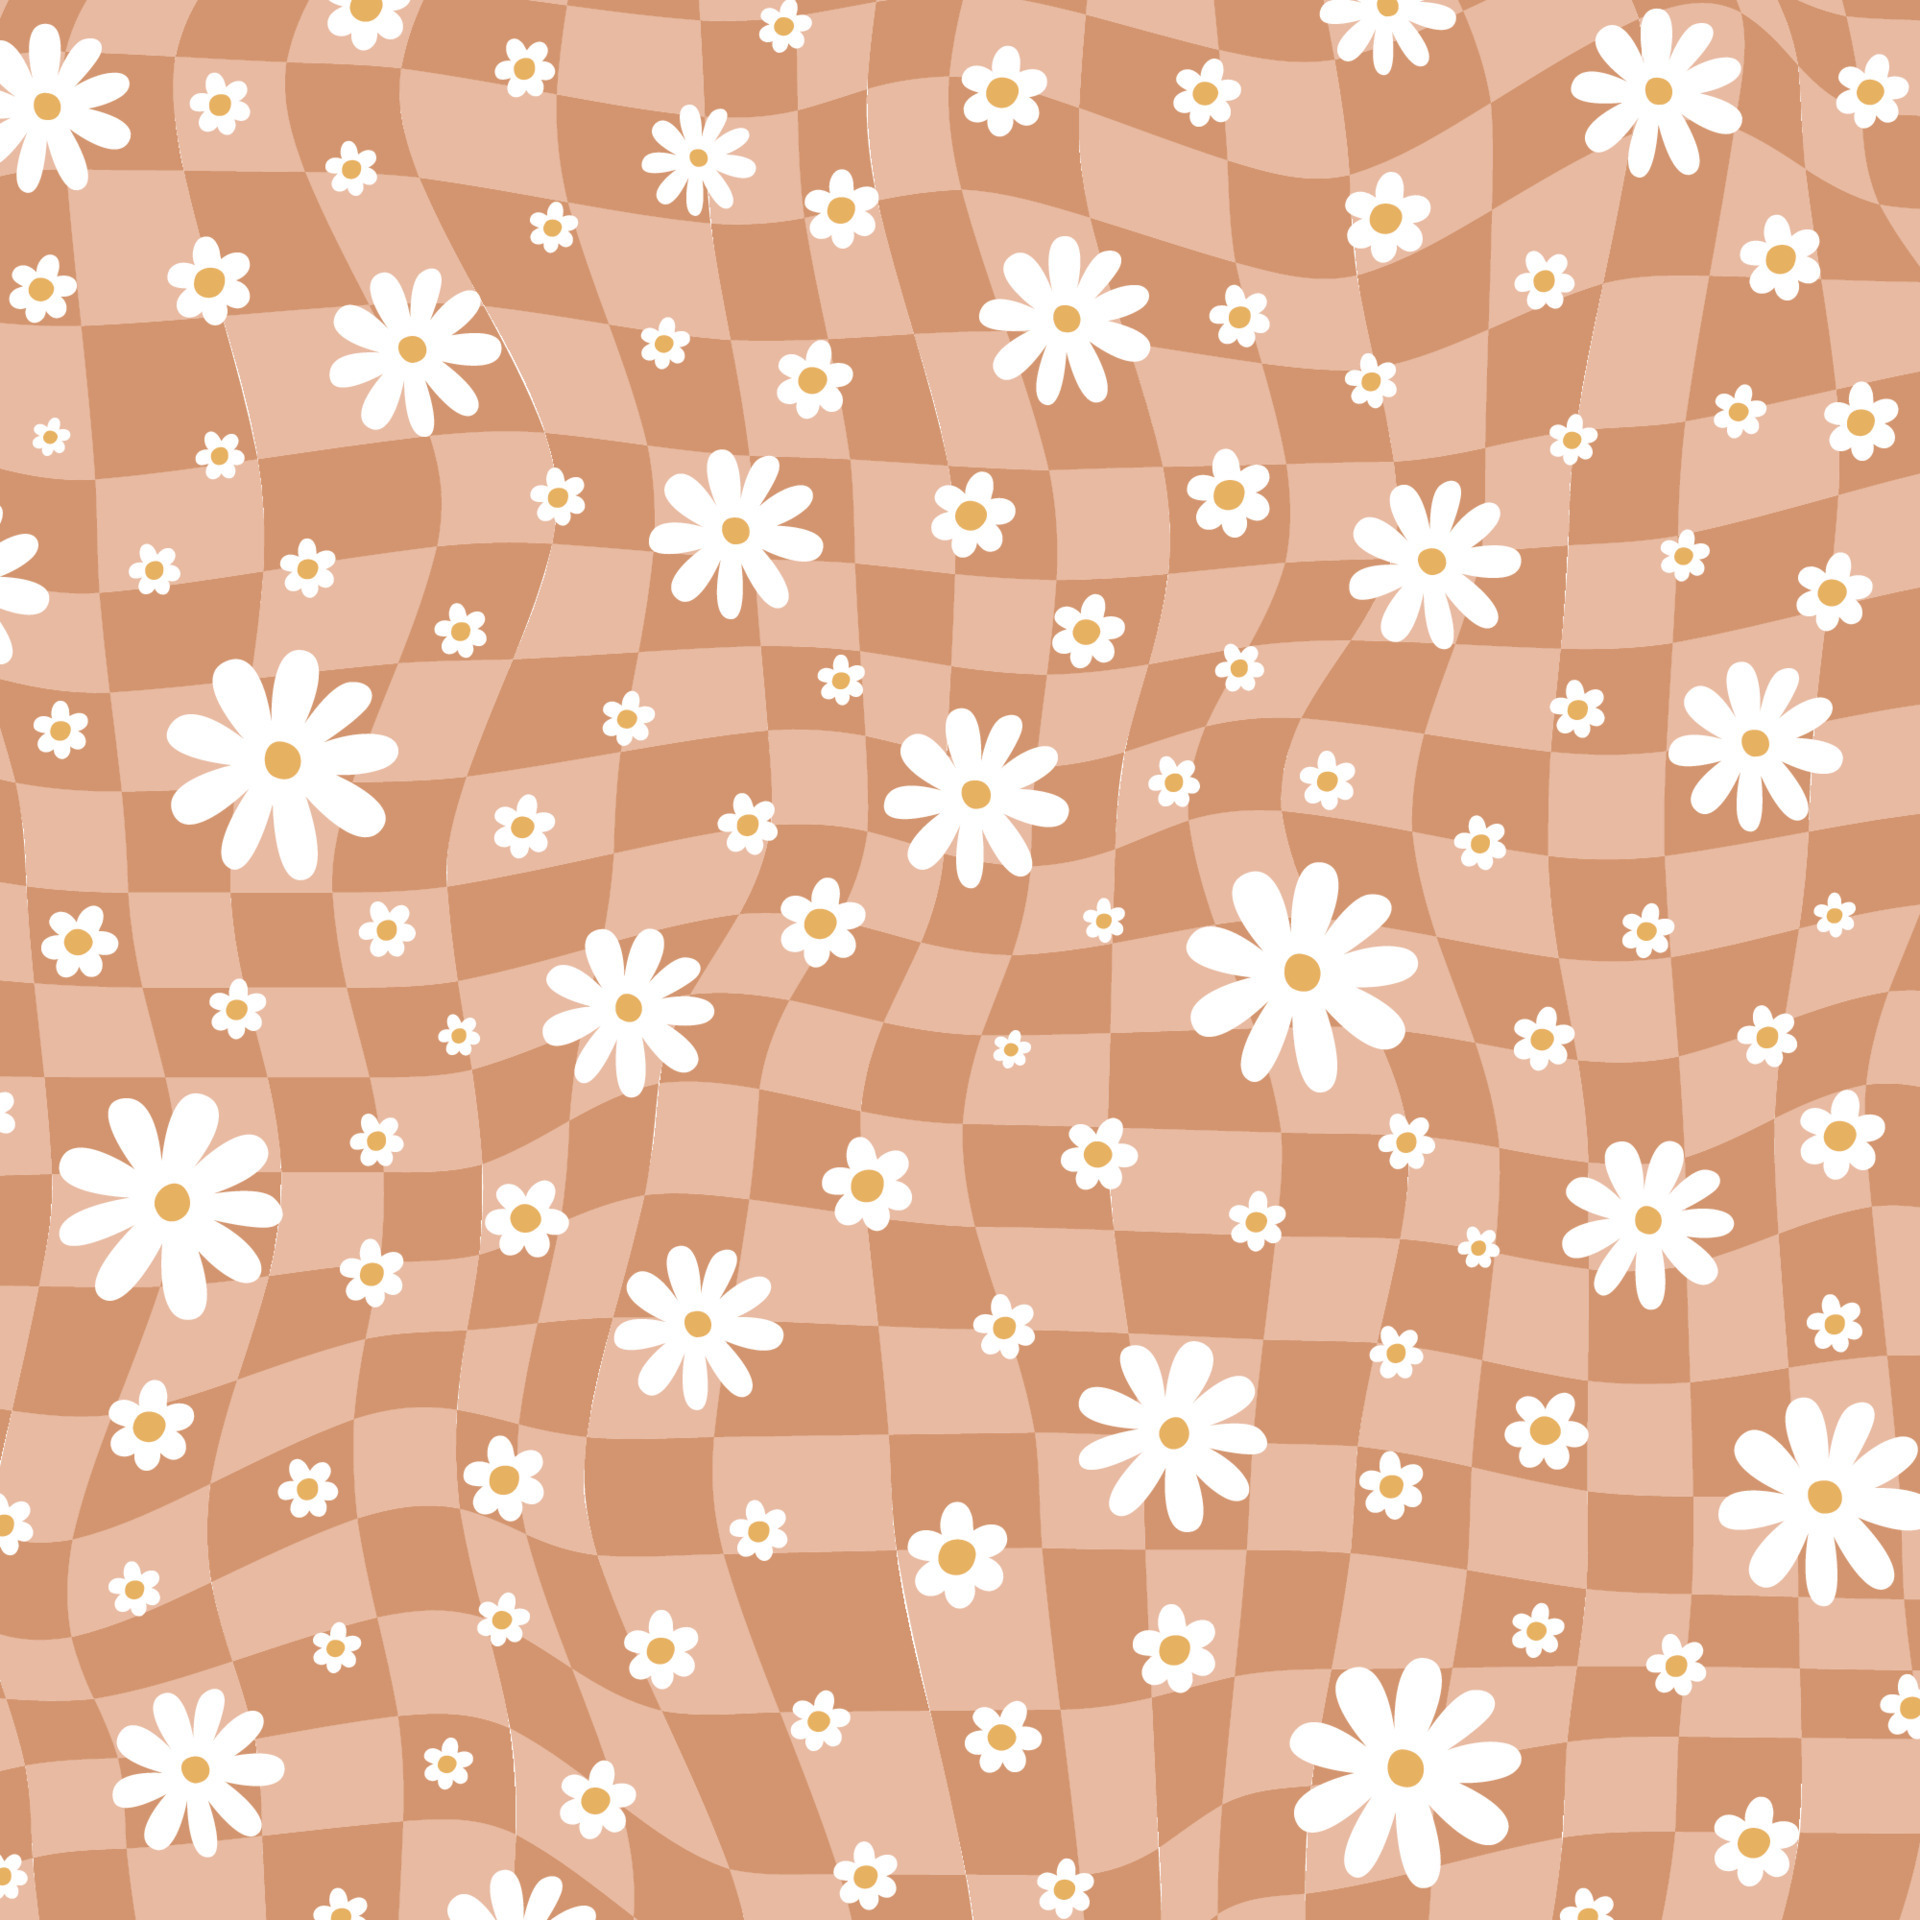 Daisy Flowers Wallpaper Retro Aesthetic Stock Image  Image of herb  sunflower 228196869